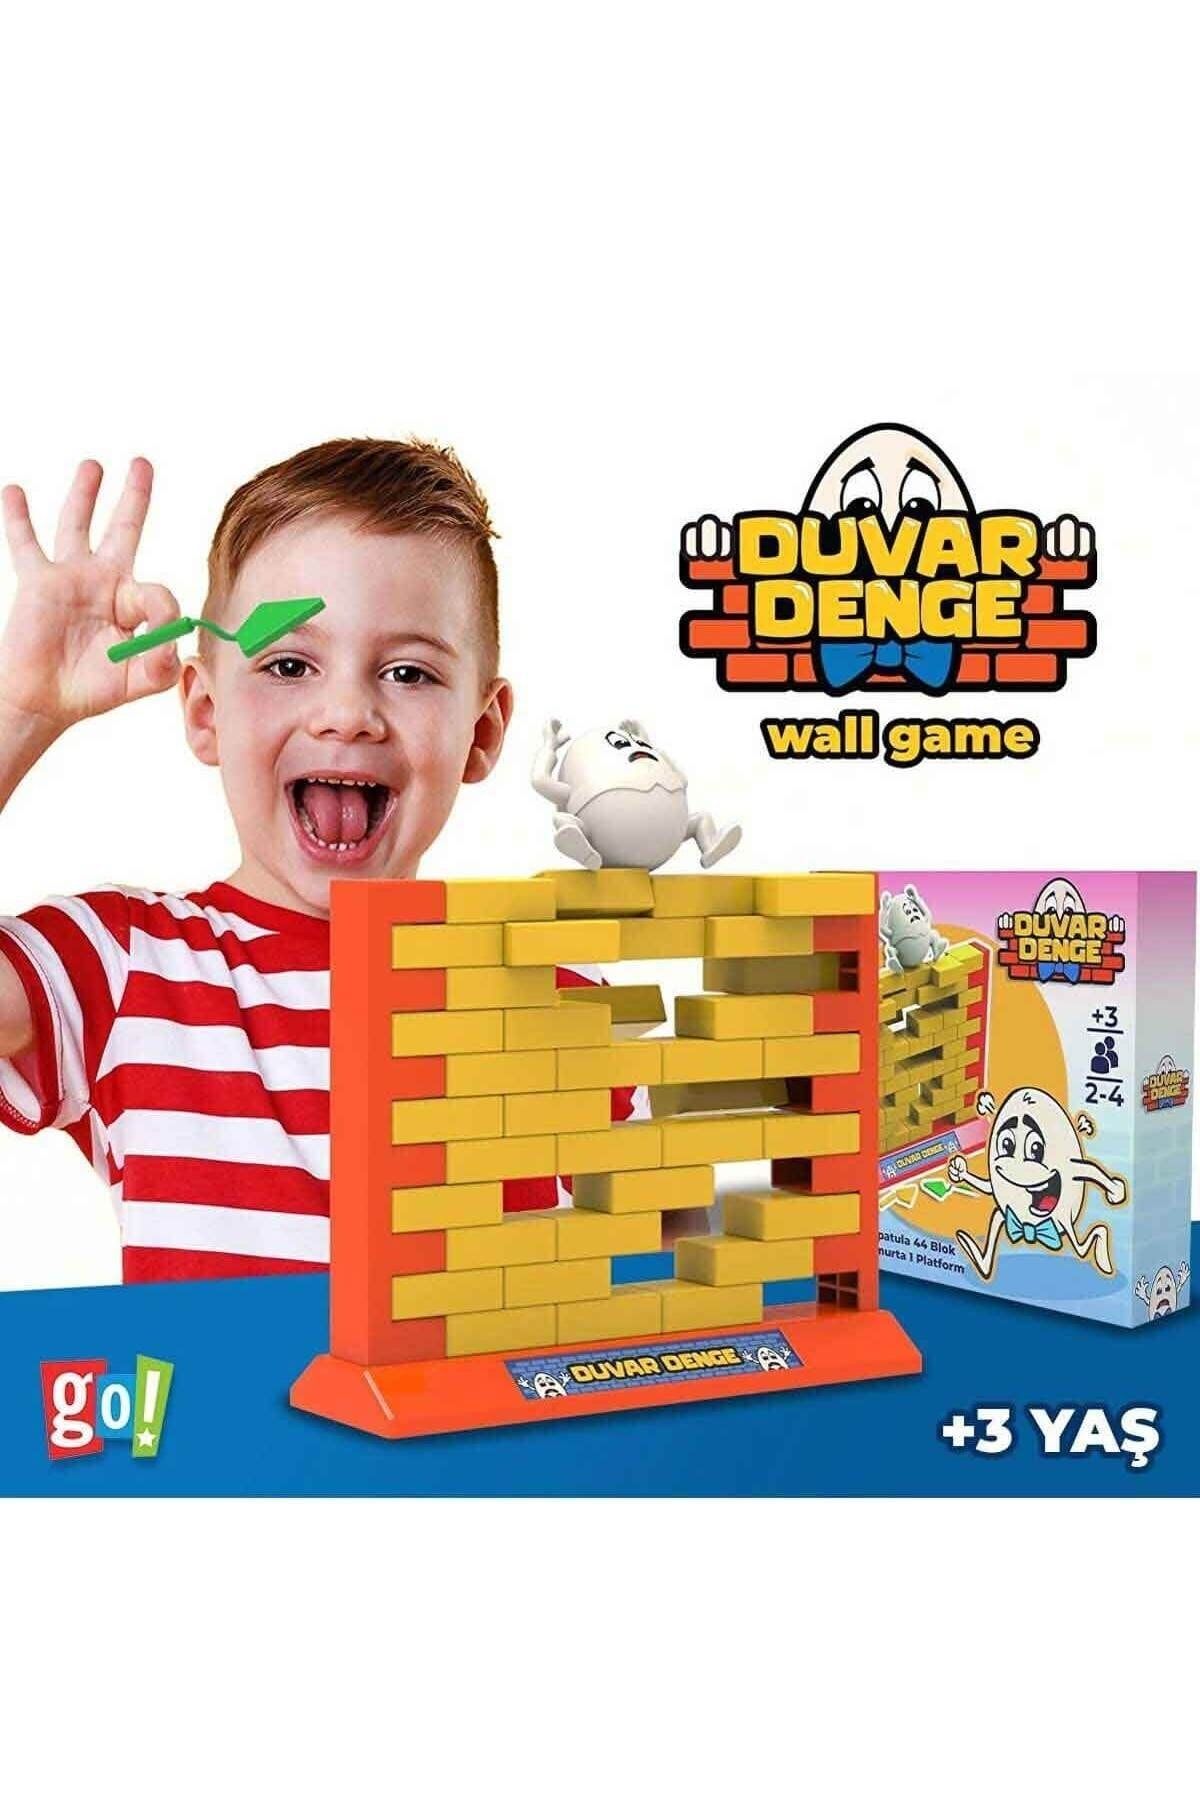 Go Toys Wall Game Duvar Denge Oyunu Egitici Kutu Oyunu